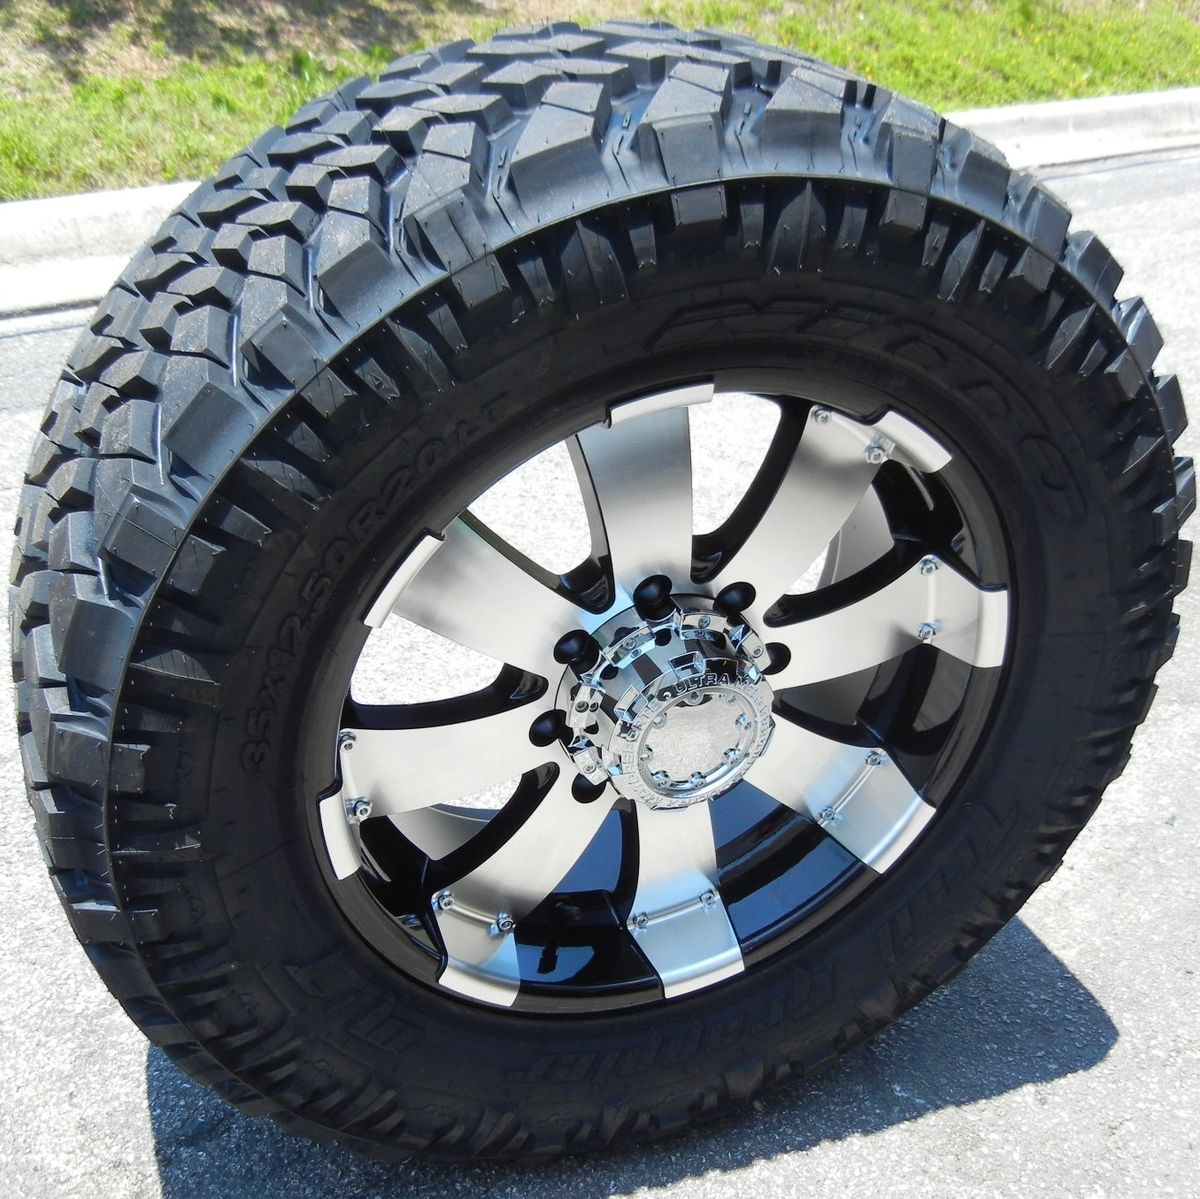 20 Black Ultra Wheels 33 Nitto Trail Tire Chevy Silverado GMC 2500